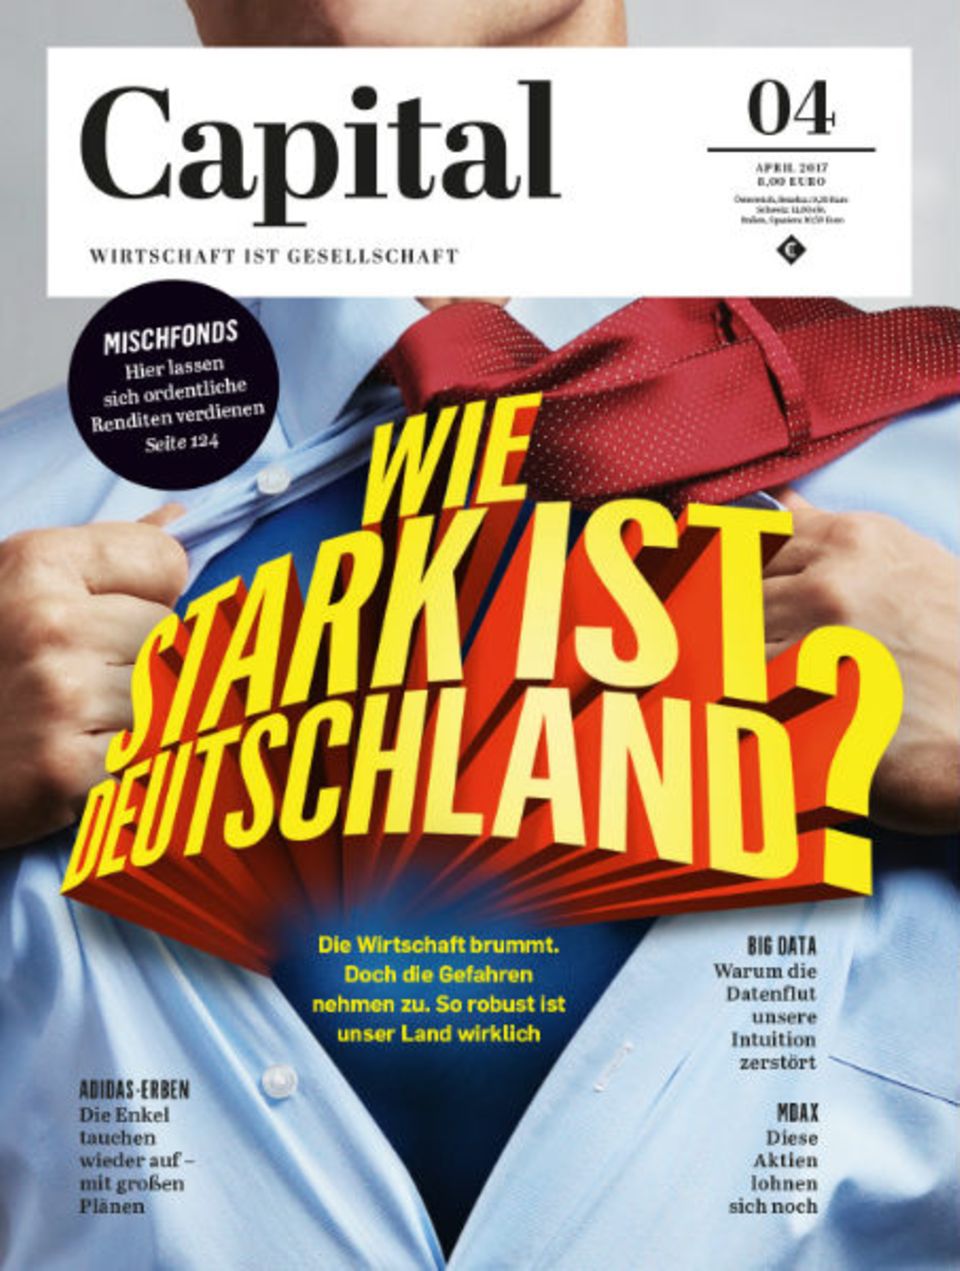 Figure Capital-Cover 04/17